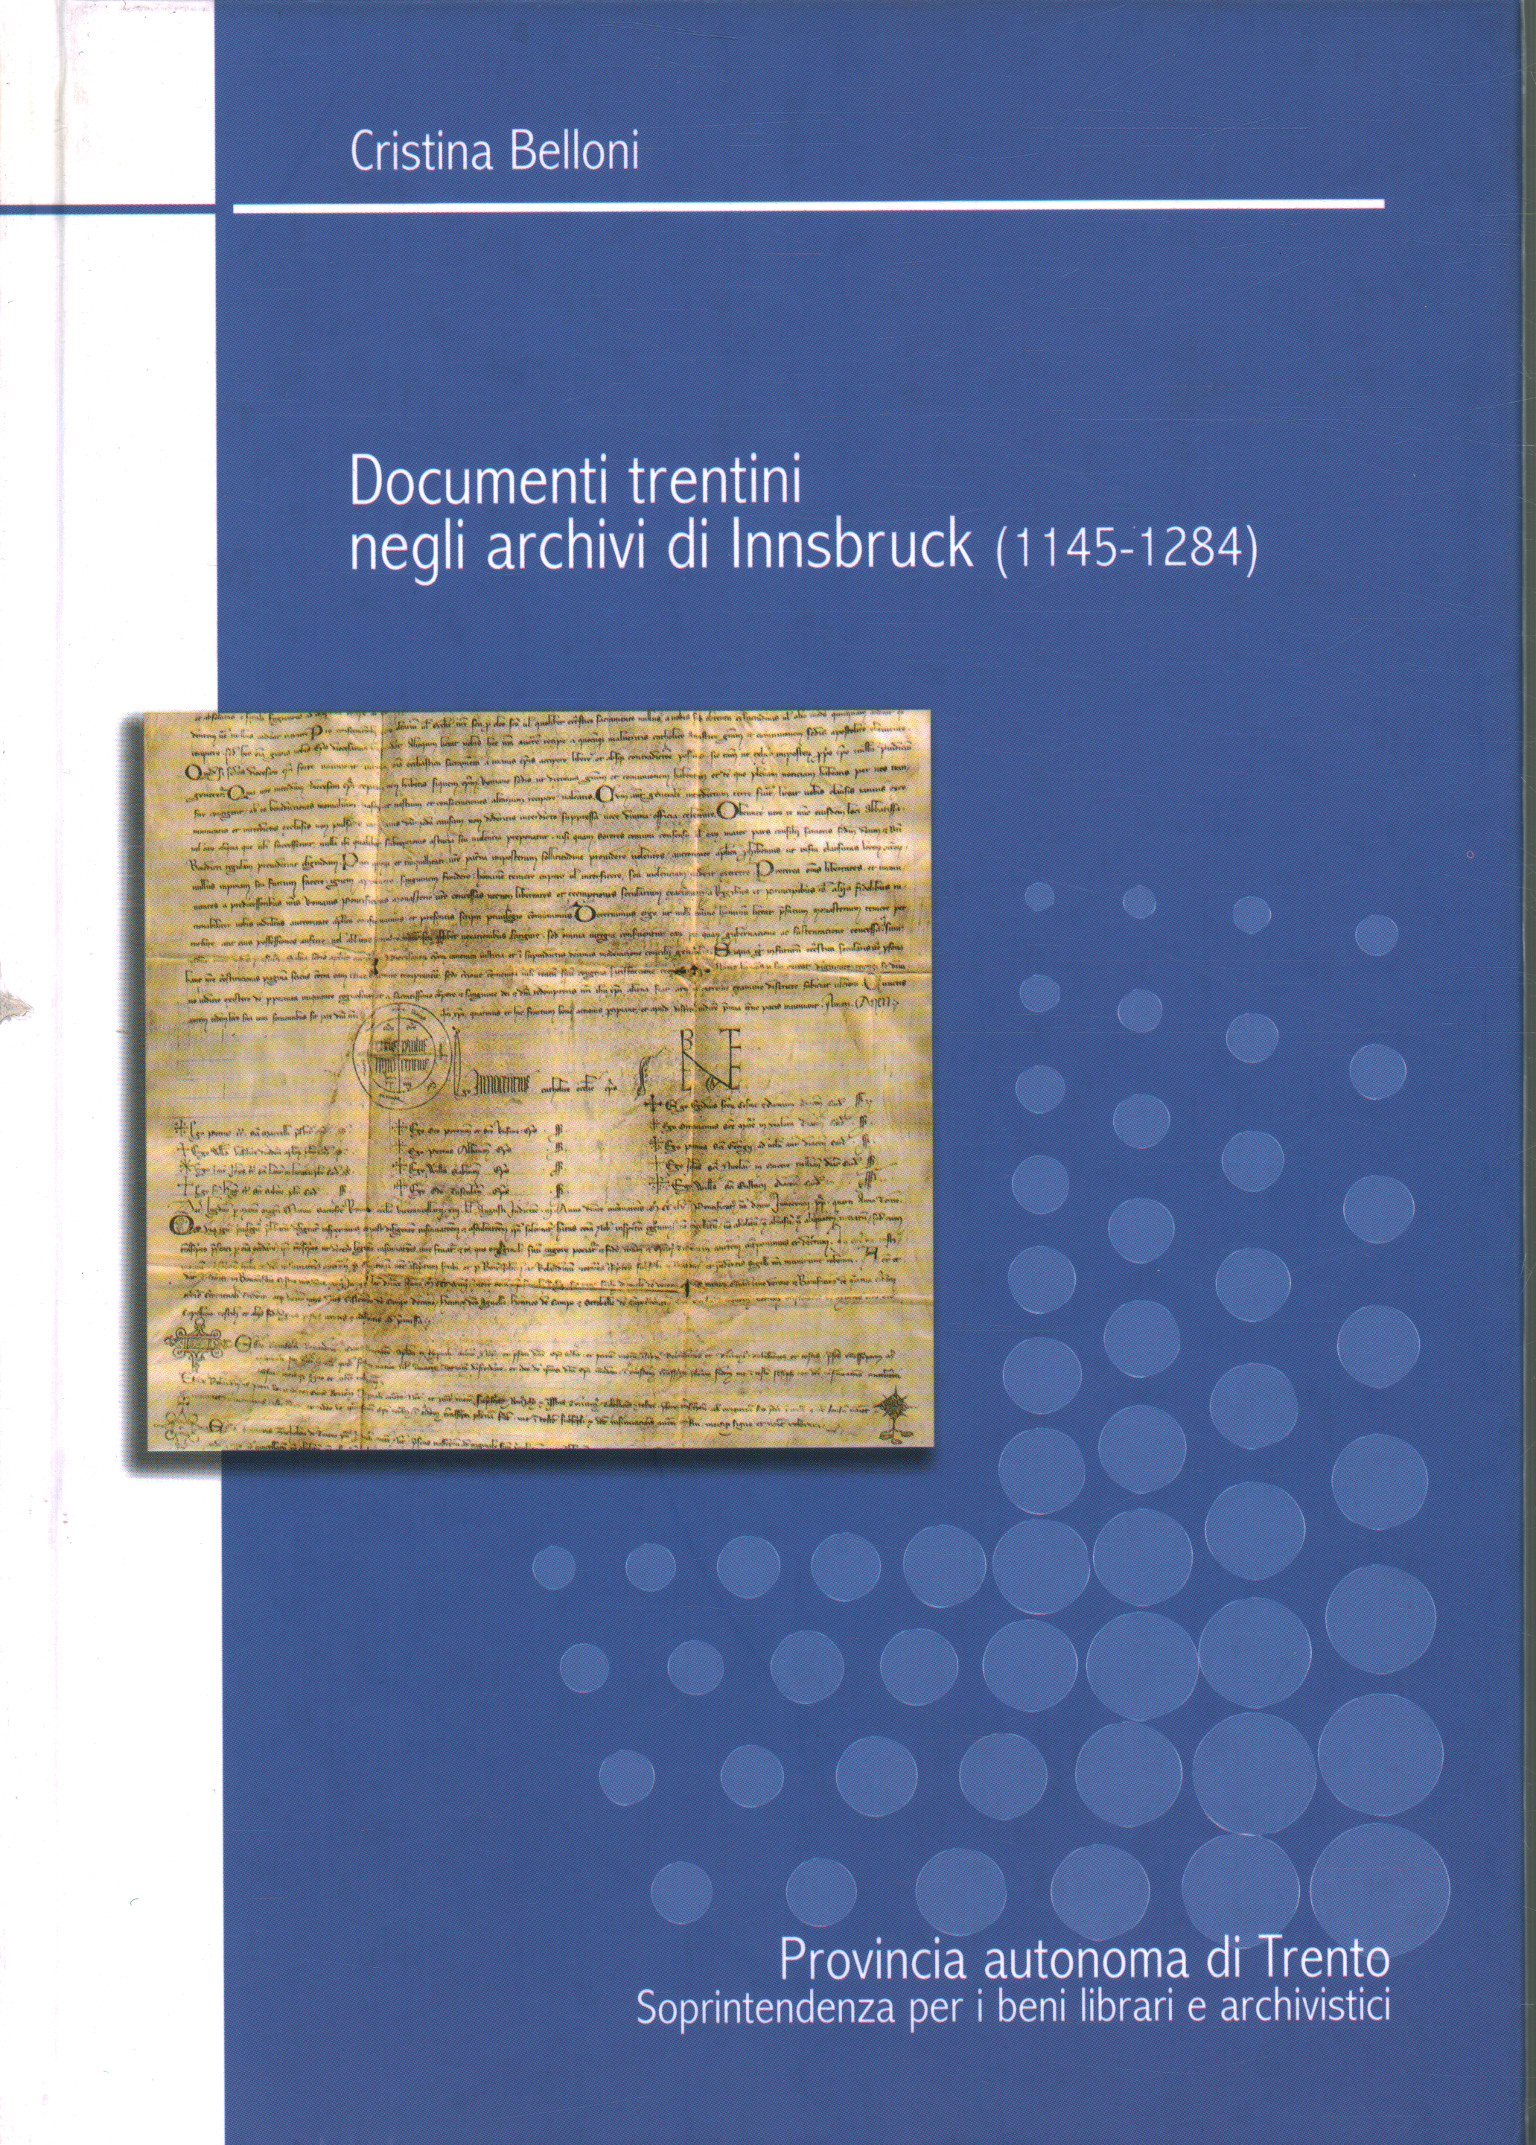 Documents trentin dans les archives de Innsbruck (114, Cristina Belloni